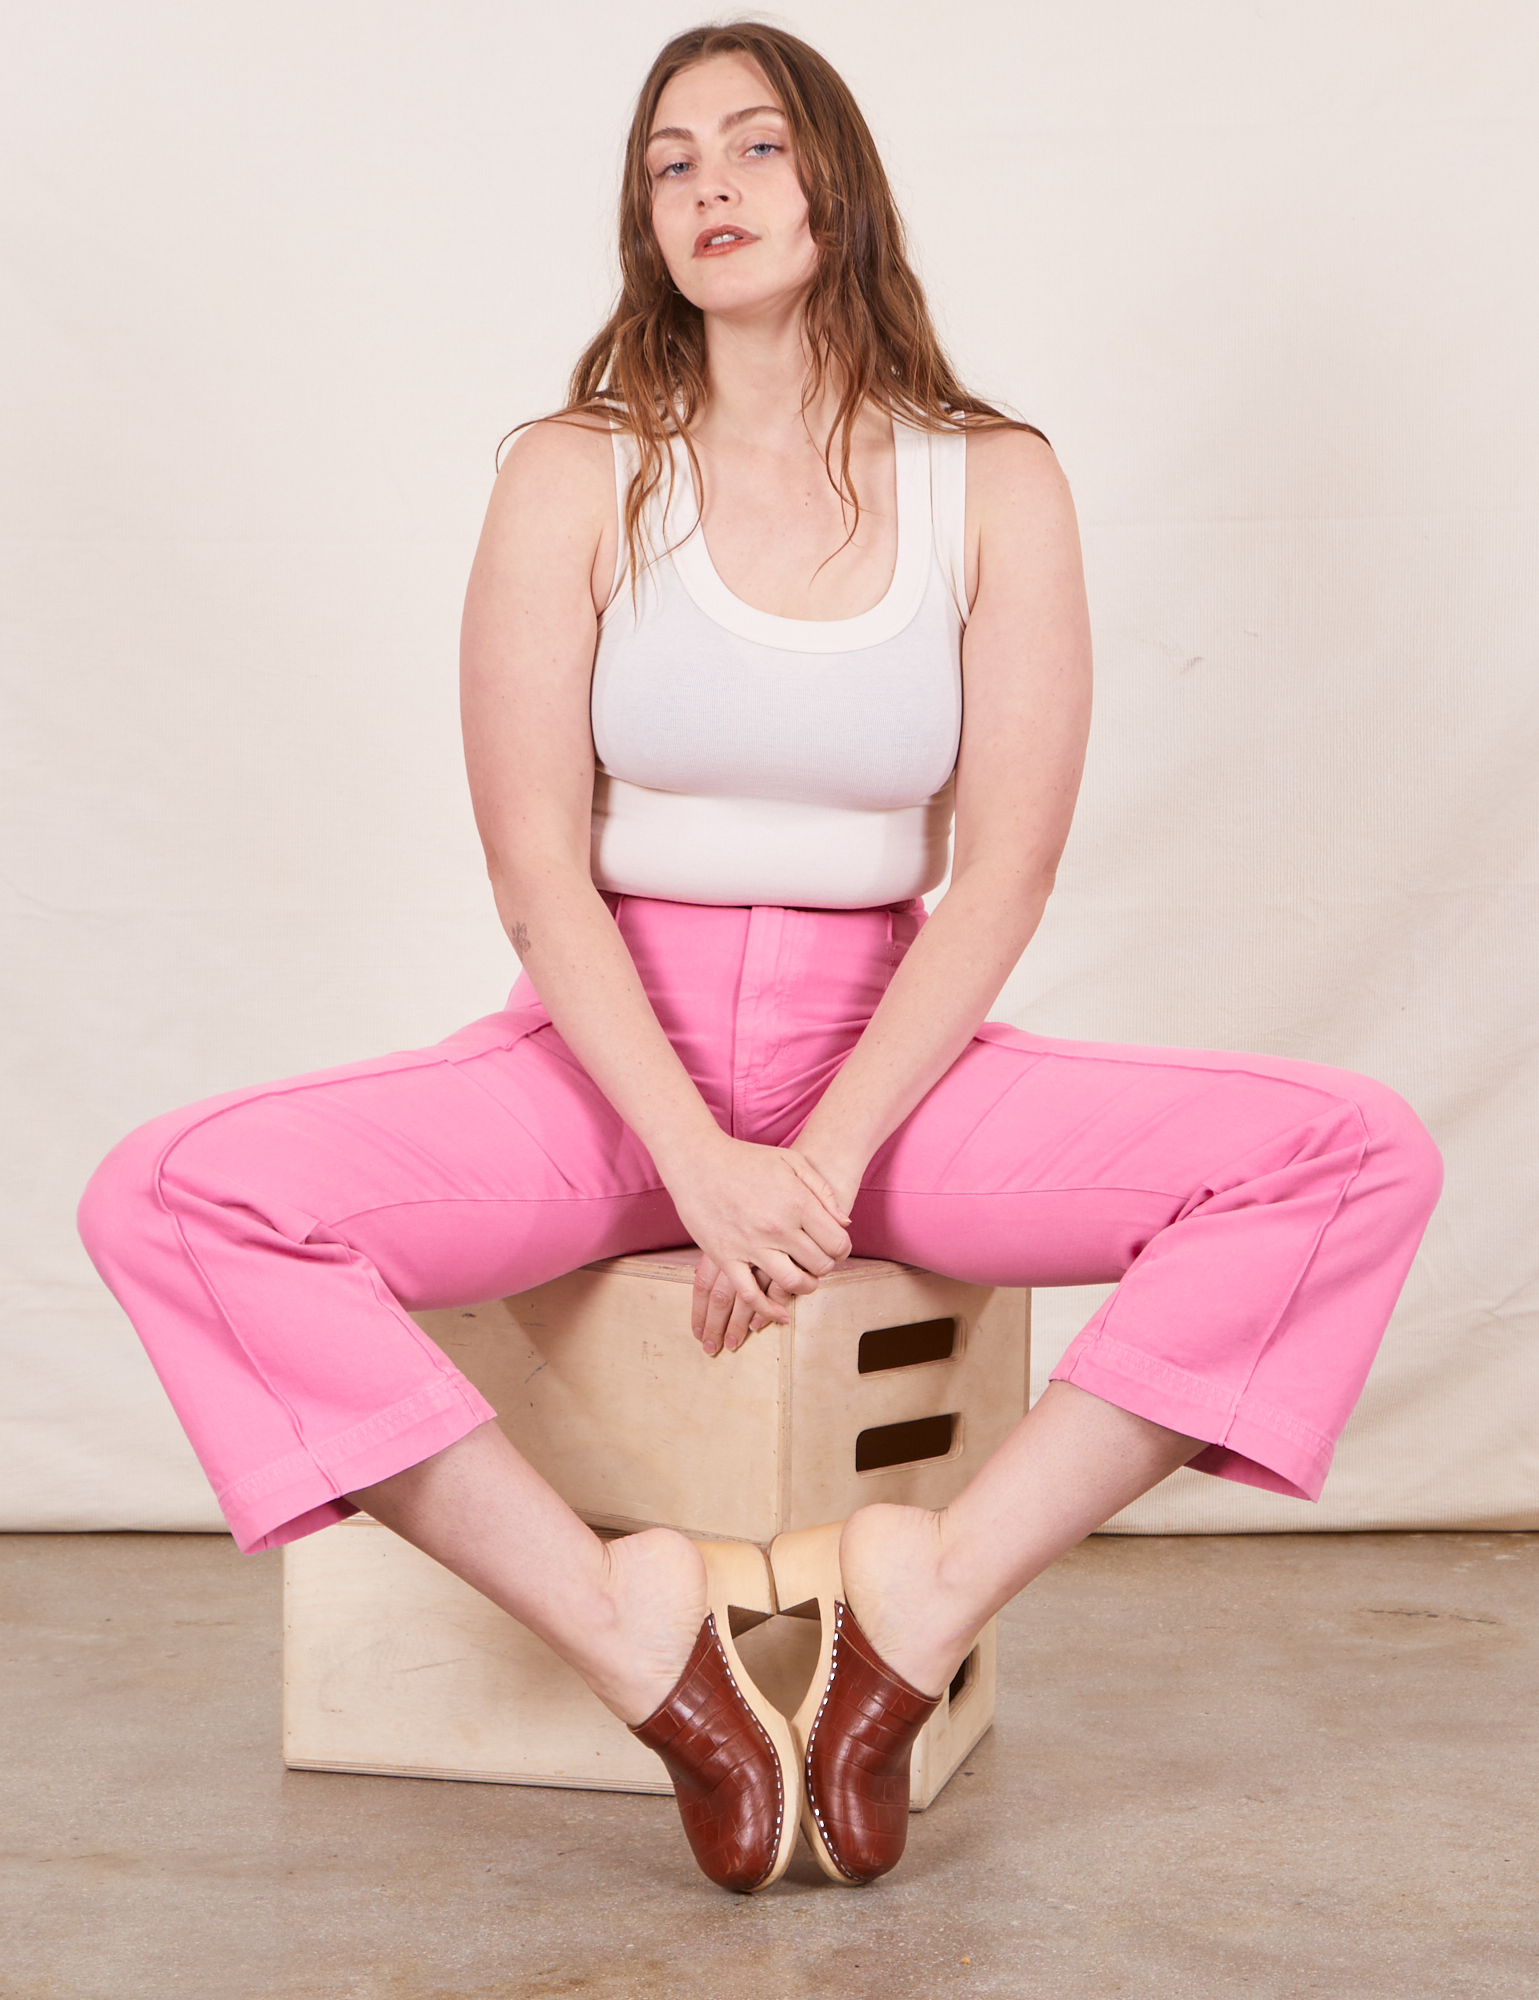 Western Pants in Bubblegum Pink on Allison wearing Tank Top in vintage tee off-white sitting on wooden crate